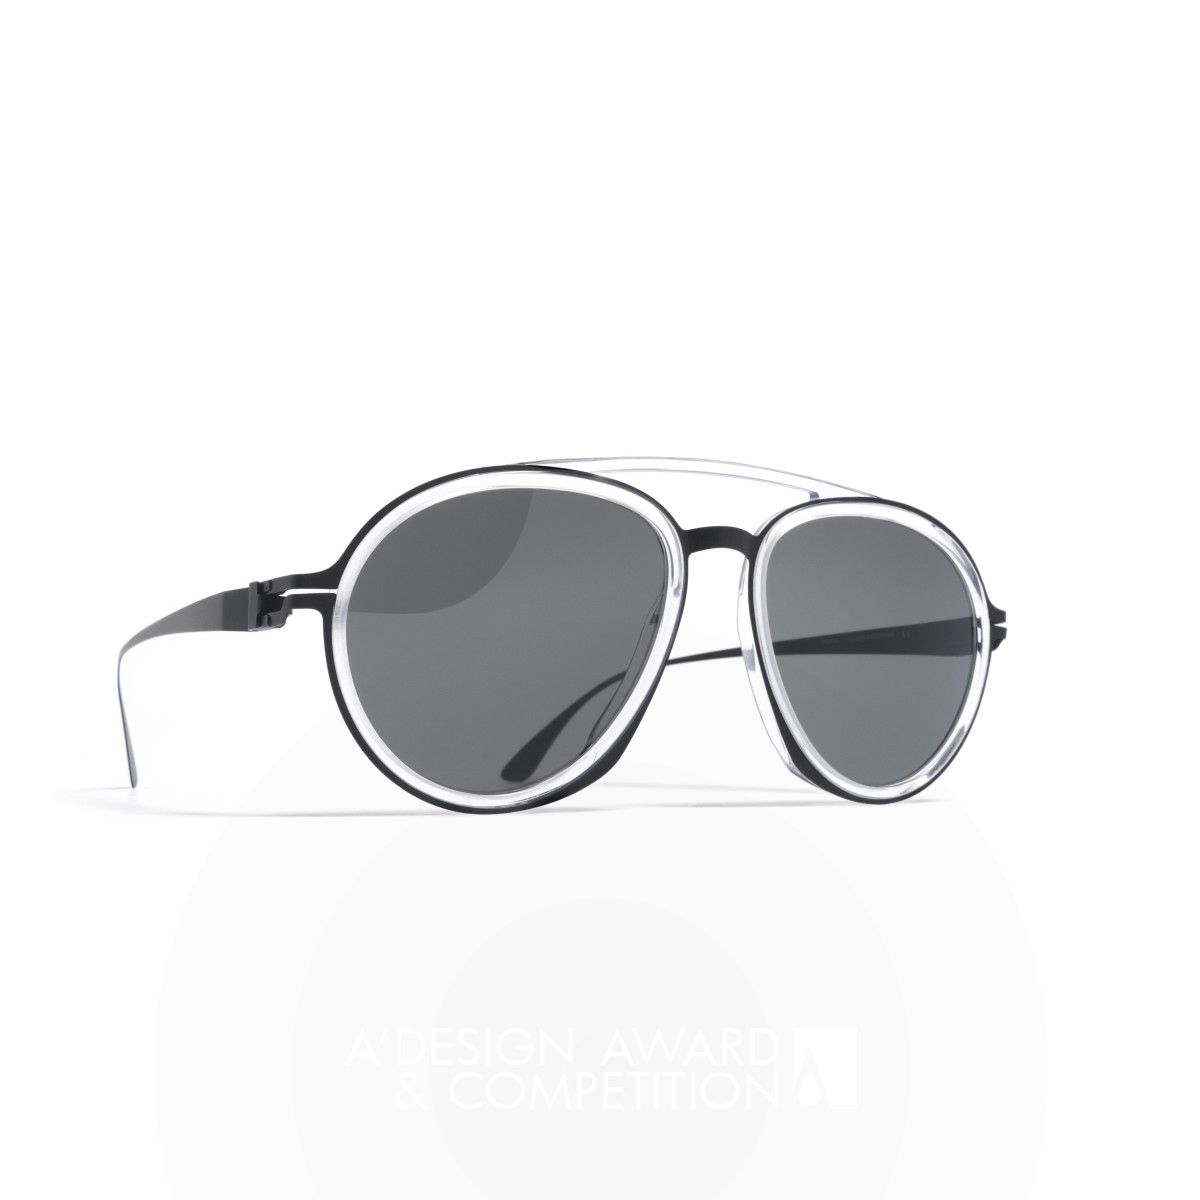 Mykita / Damir Doma 1.3 sunglasses by Mykita Gmbh